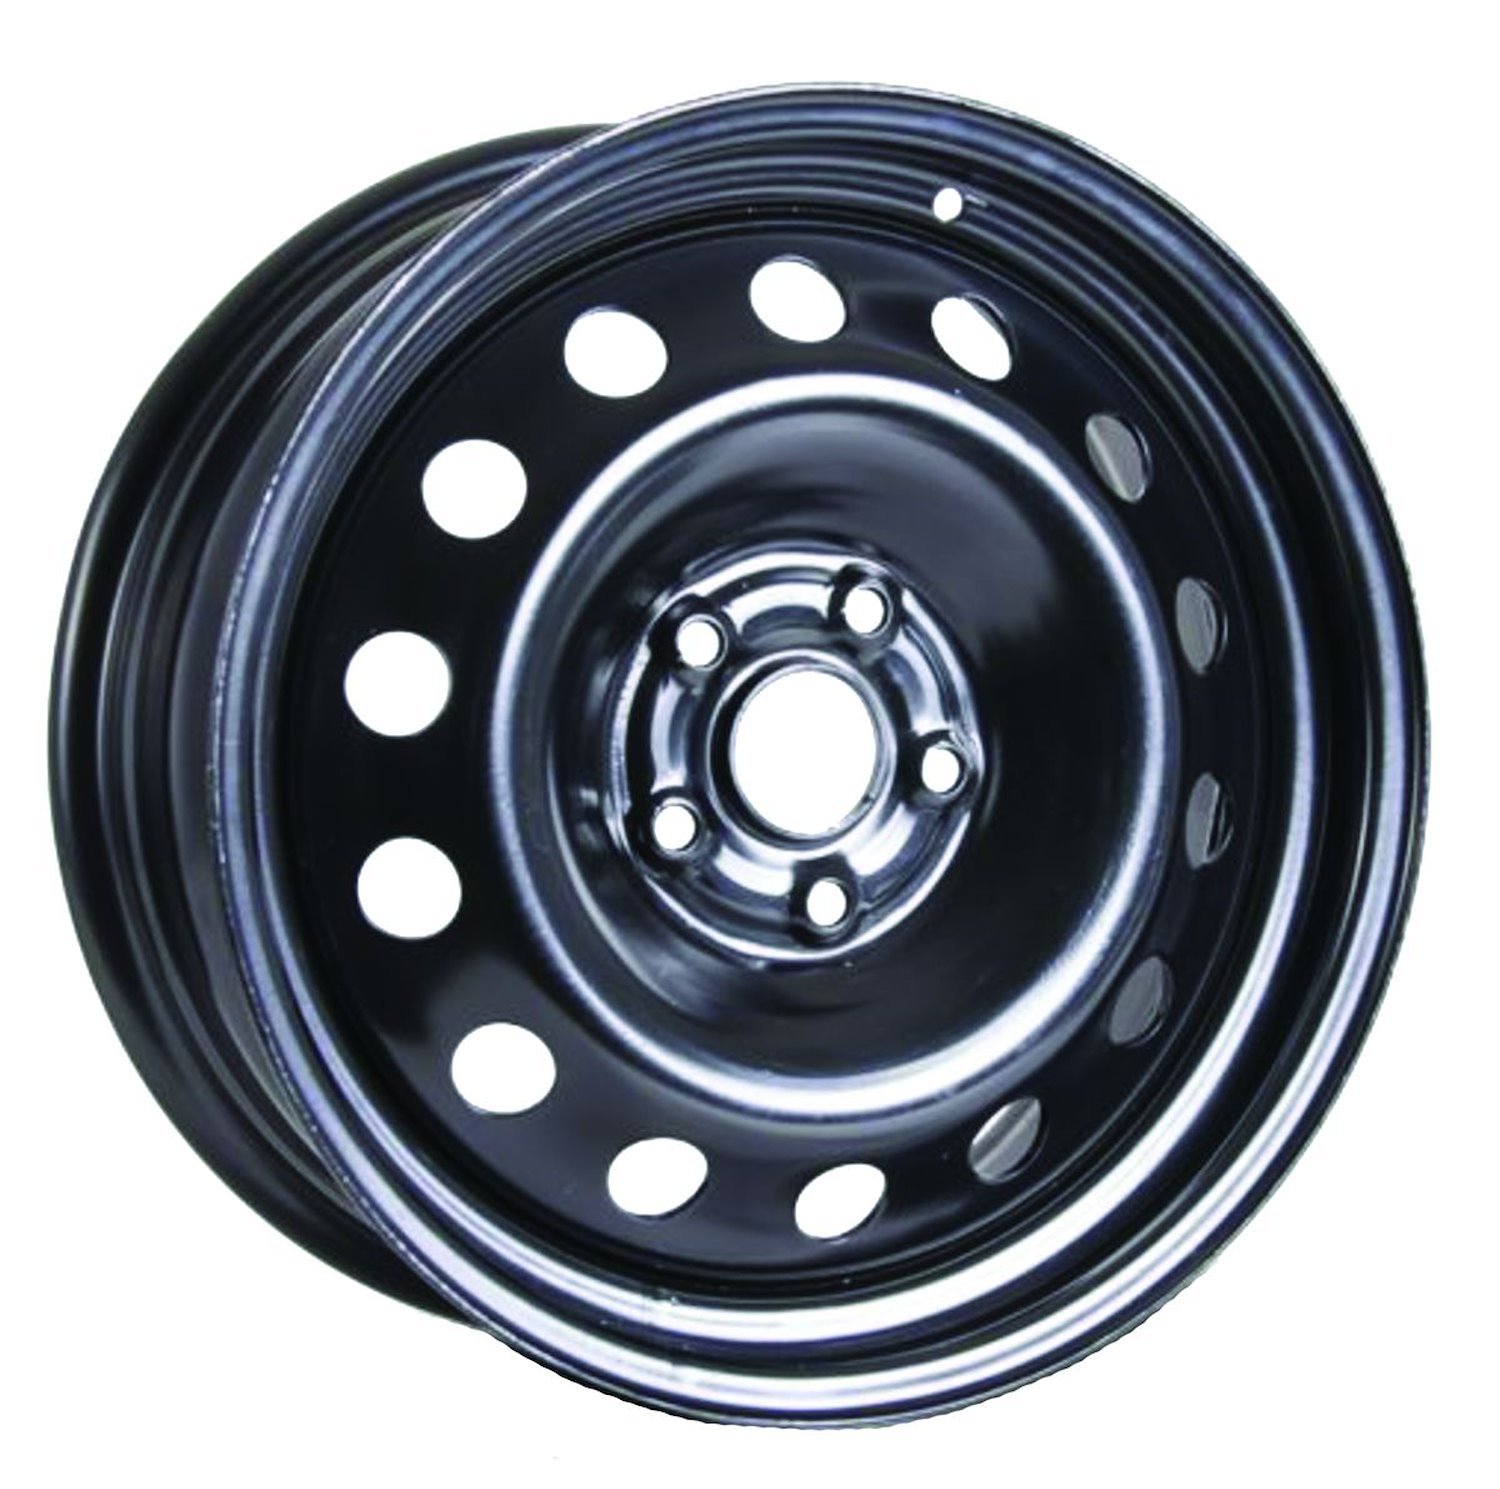 X47712 Steel Wheel [Size: 17" x 7"] Black Finish